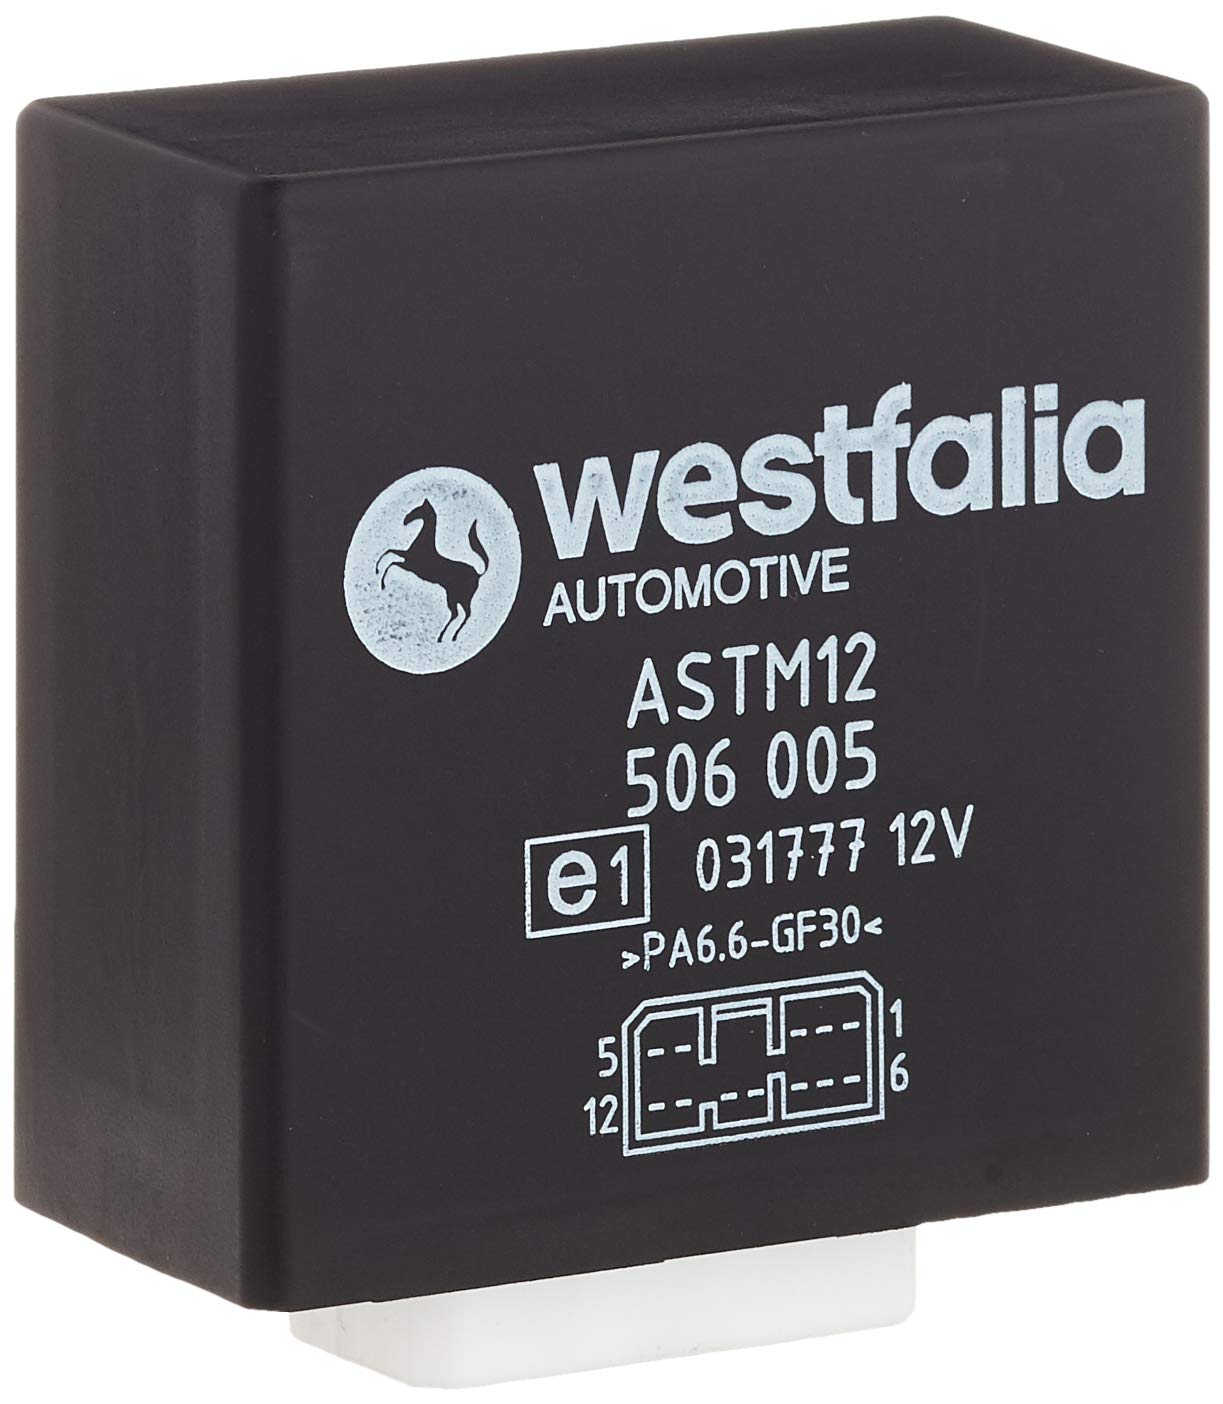 Westfalia 900001506005 Steuergerät ASTM12 von Westfalia Automotive